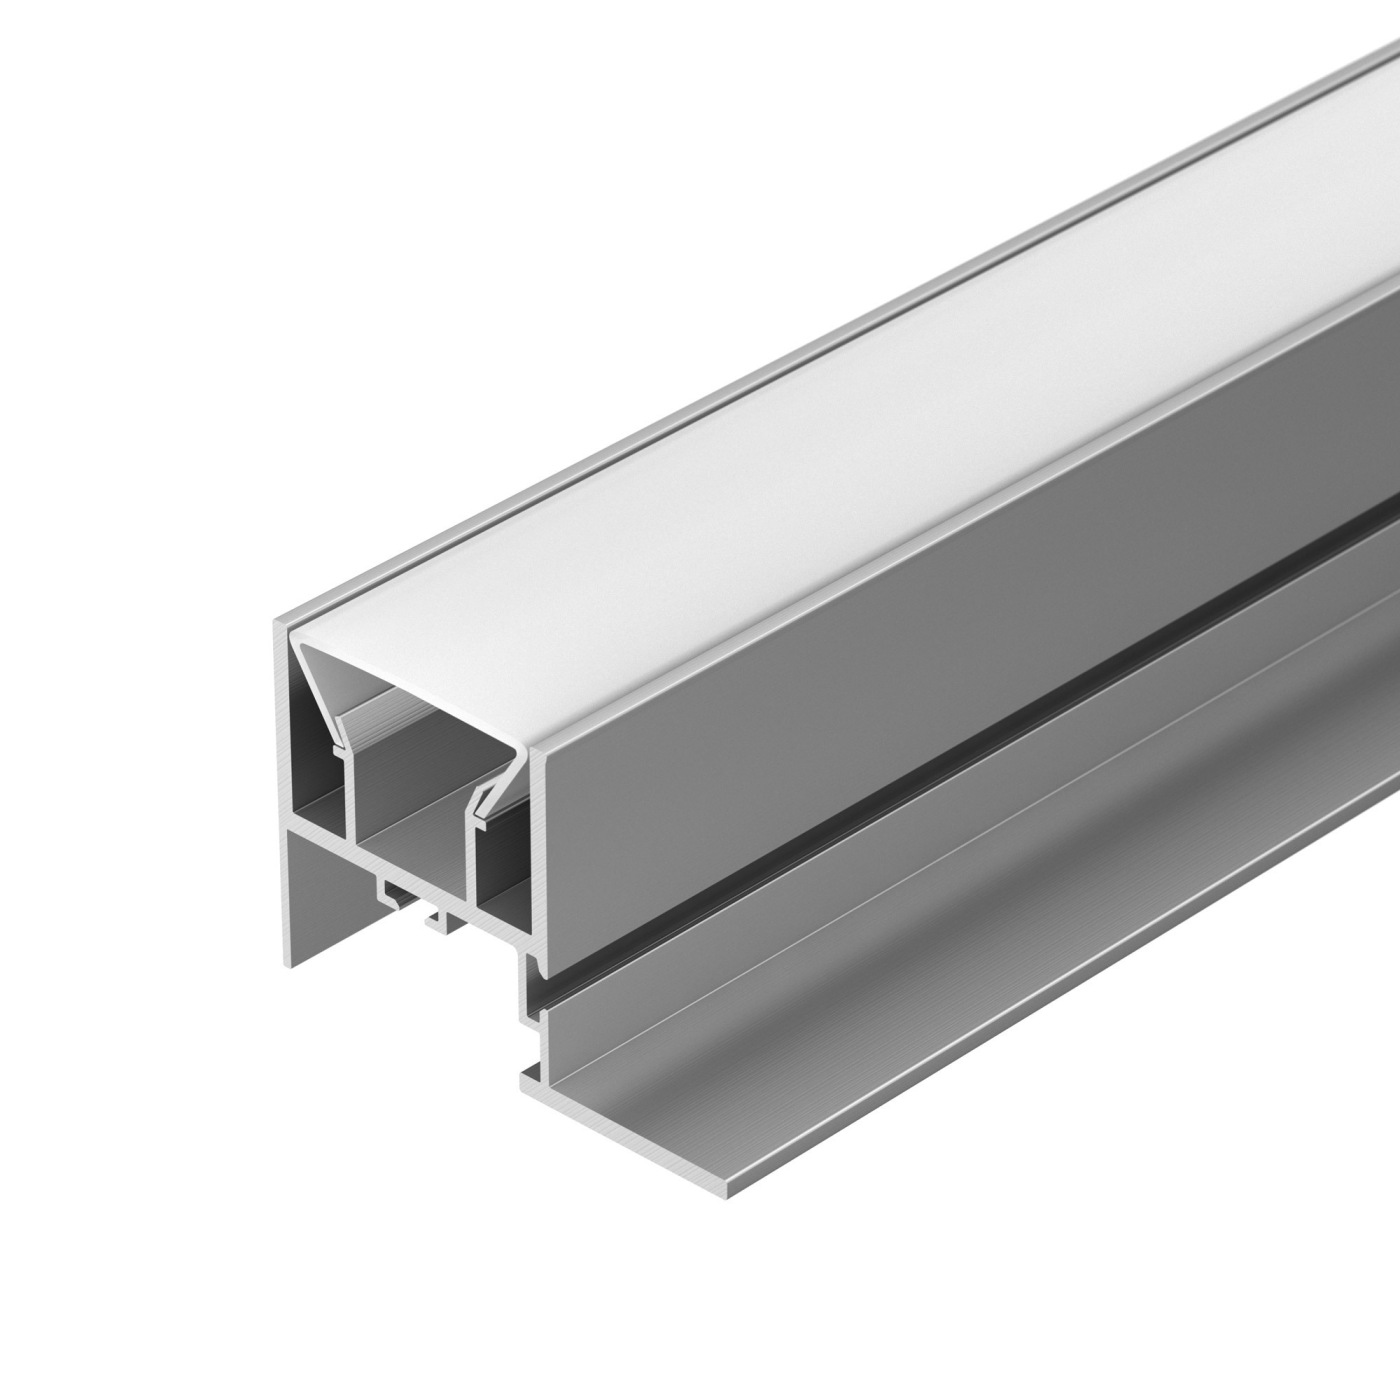 Профиль FOLED-CEIL-SIDE-2000 (Arlight, Алюминий) алюминиевый профиль ниши скрытого монтажа для гкл потолка alm 11681 pl w 2m